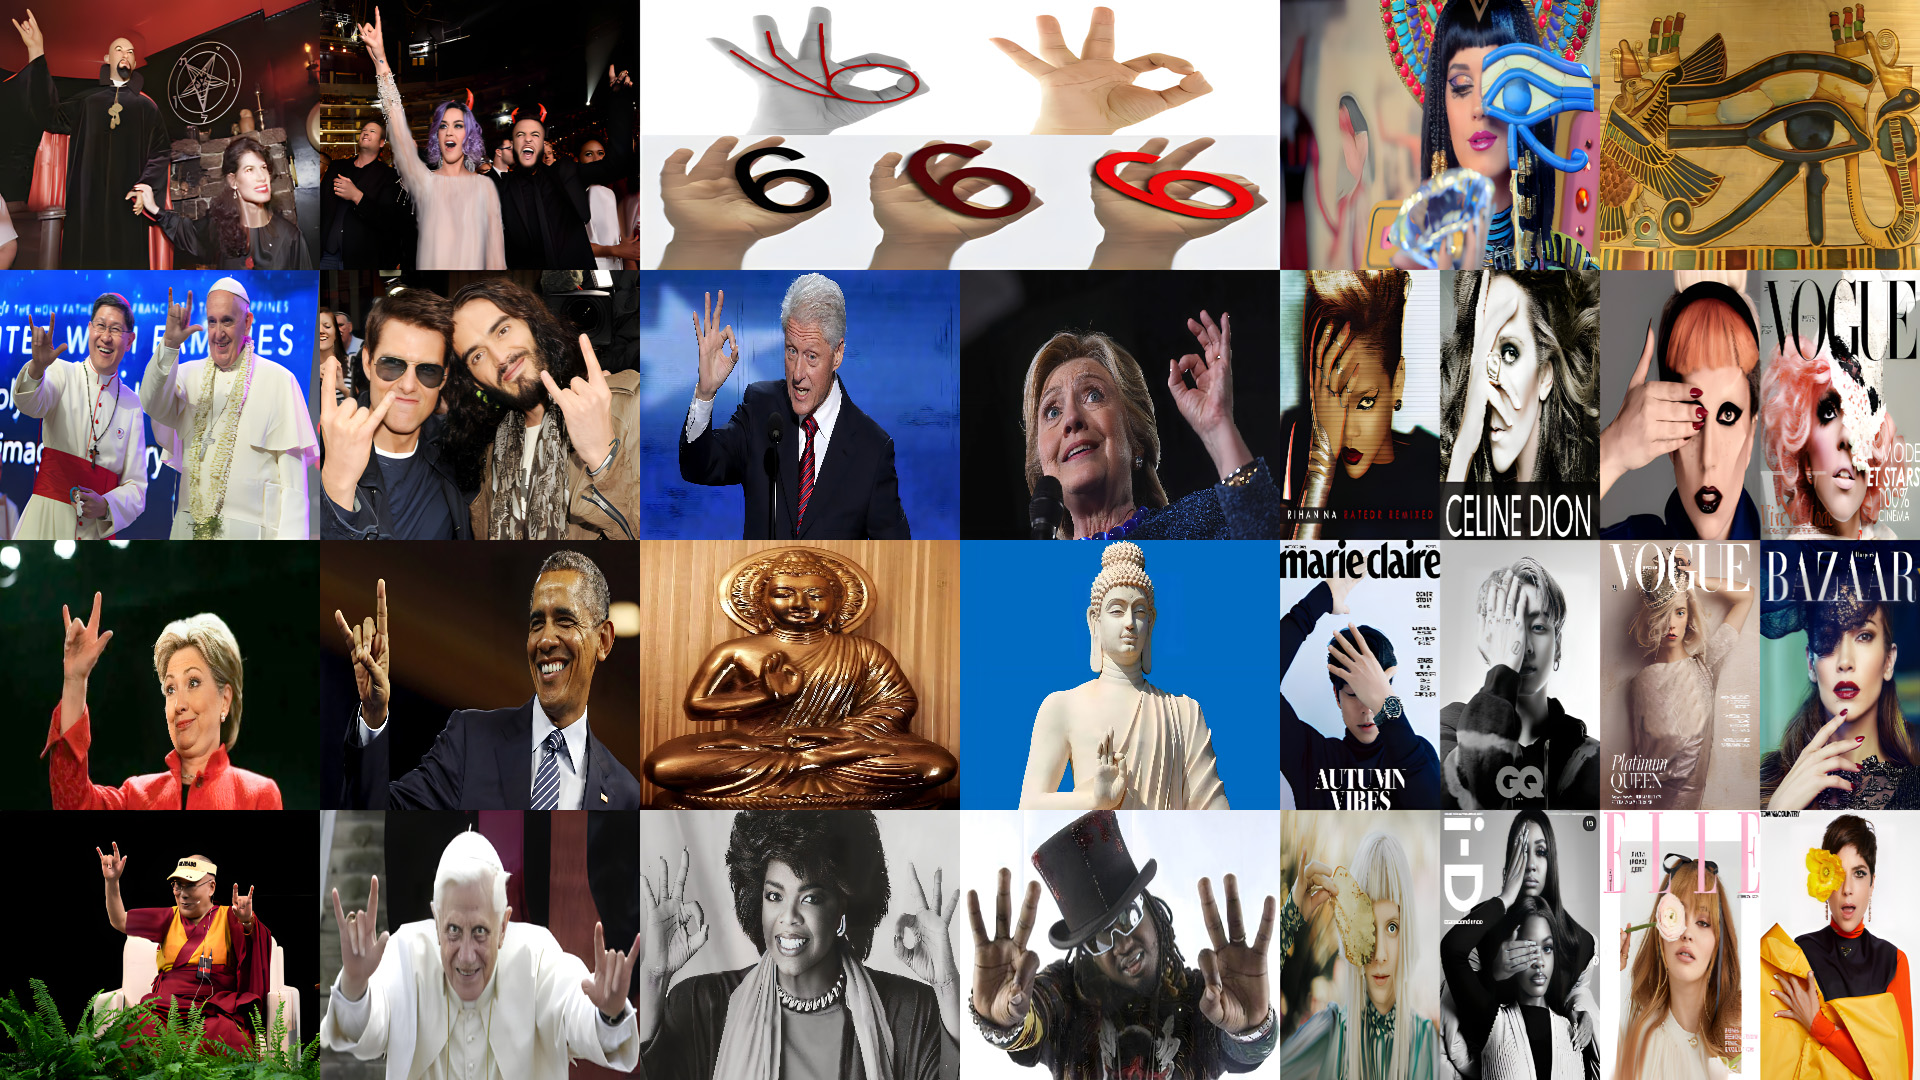 hillary bill clinton katy perry lady gaga illuminati hand signs symbols secret society freemasons occult satanic famous celebrity hollywood elite devils memes collage